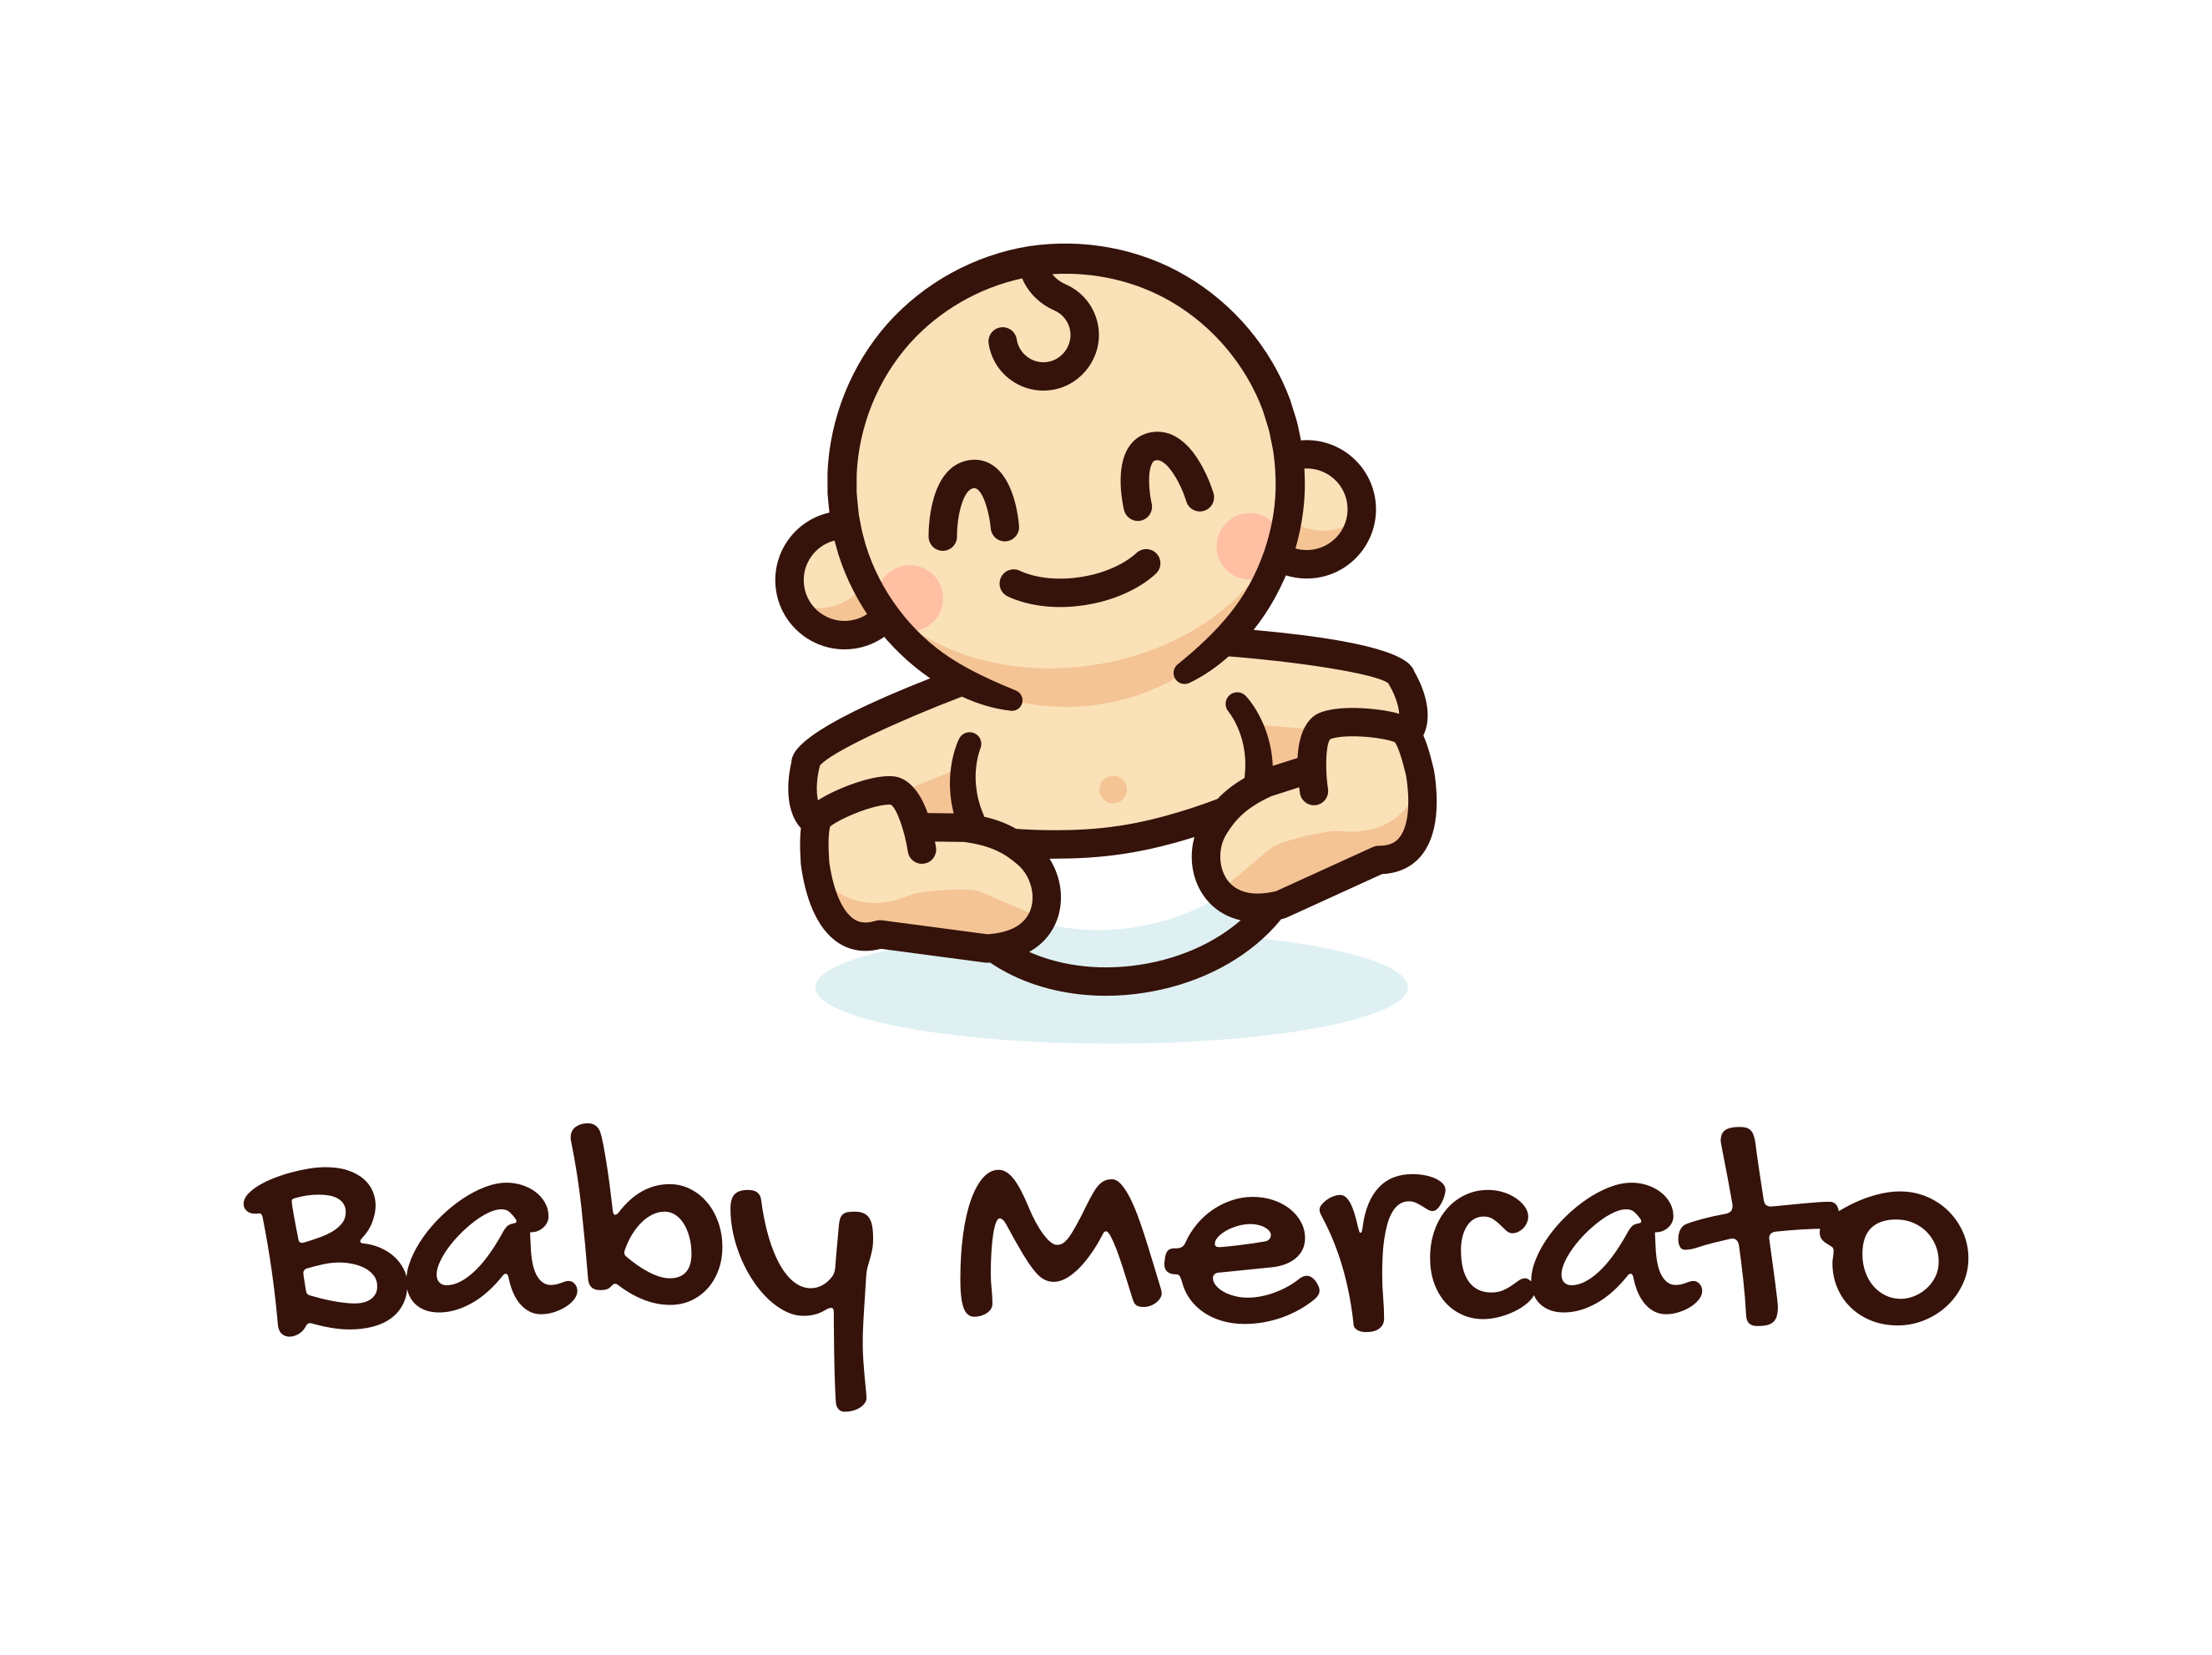 Baby Mercato